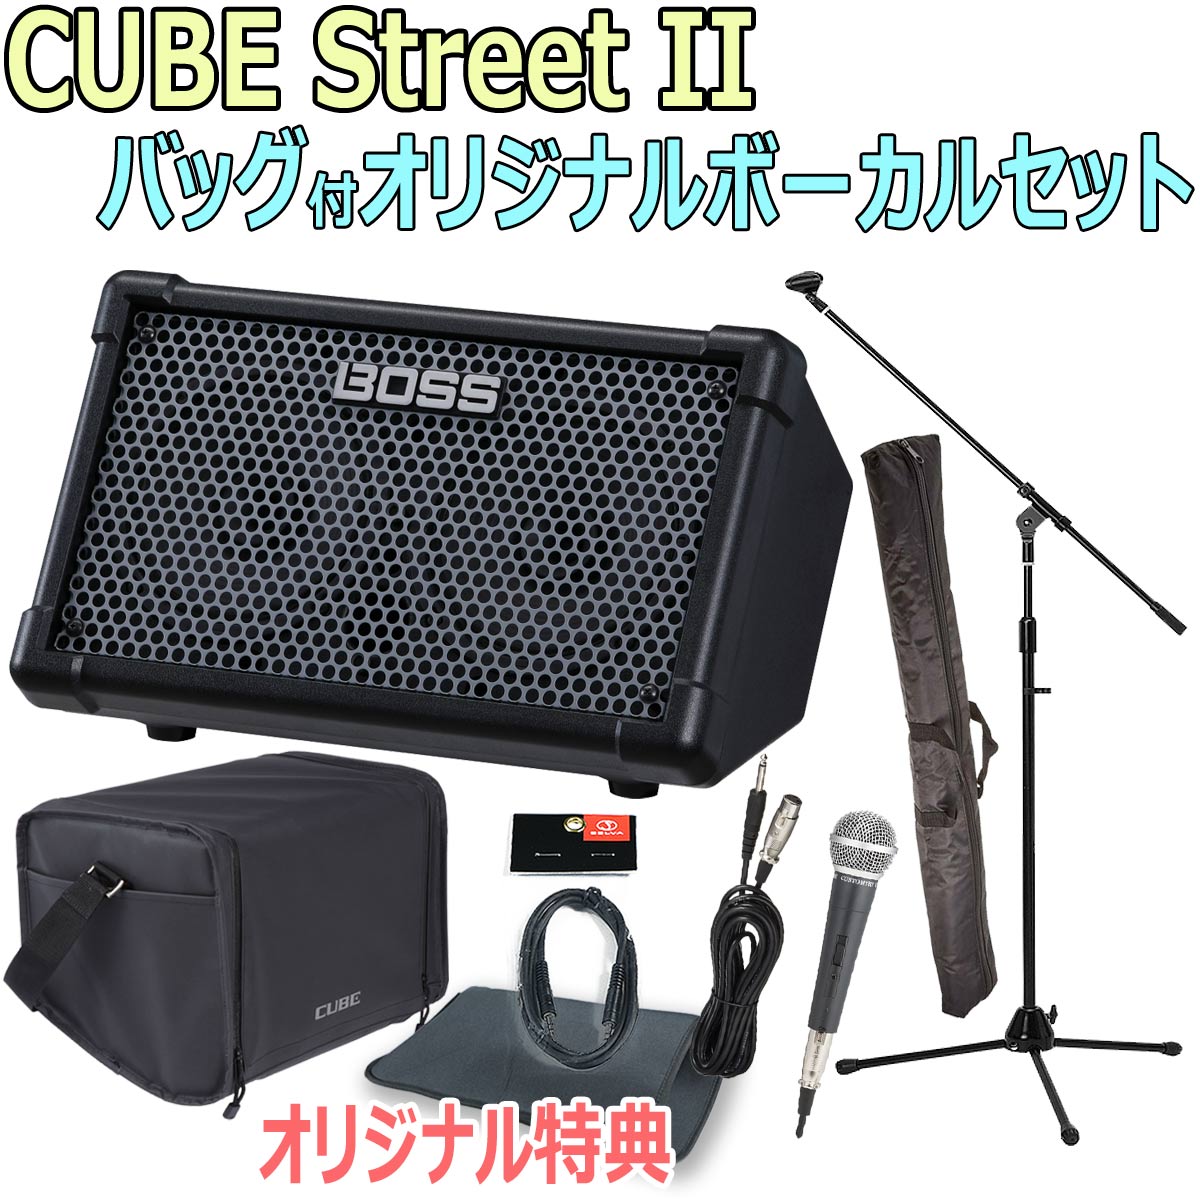 BOSS / CUBE Street II Black -純正バッグ付オリジナルボーカルセット-